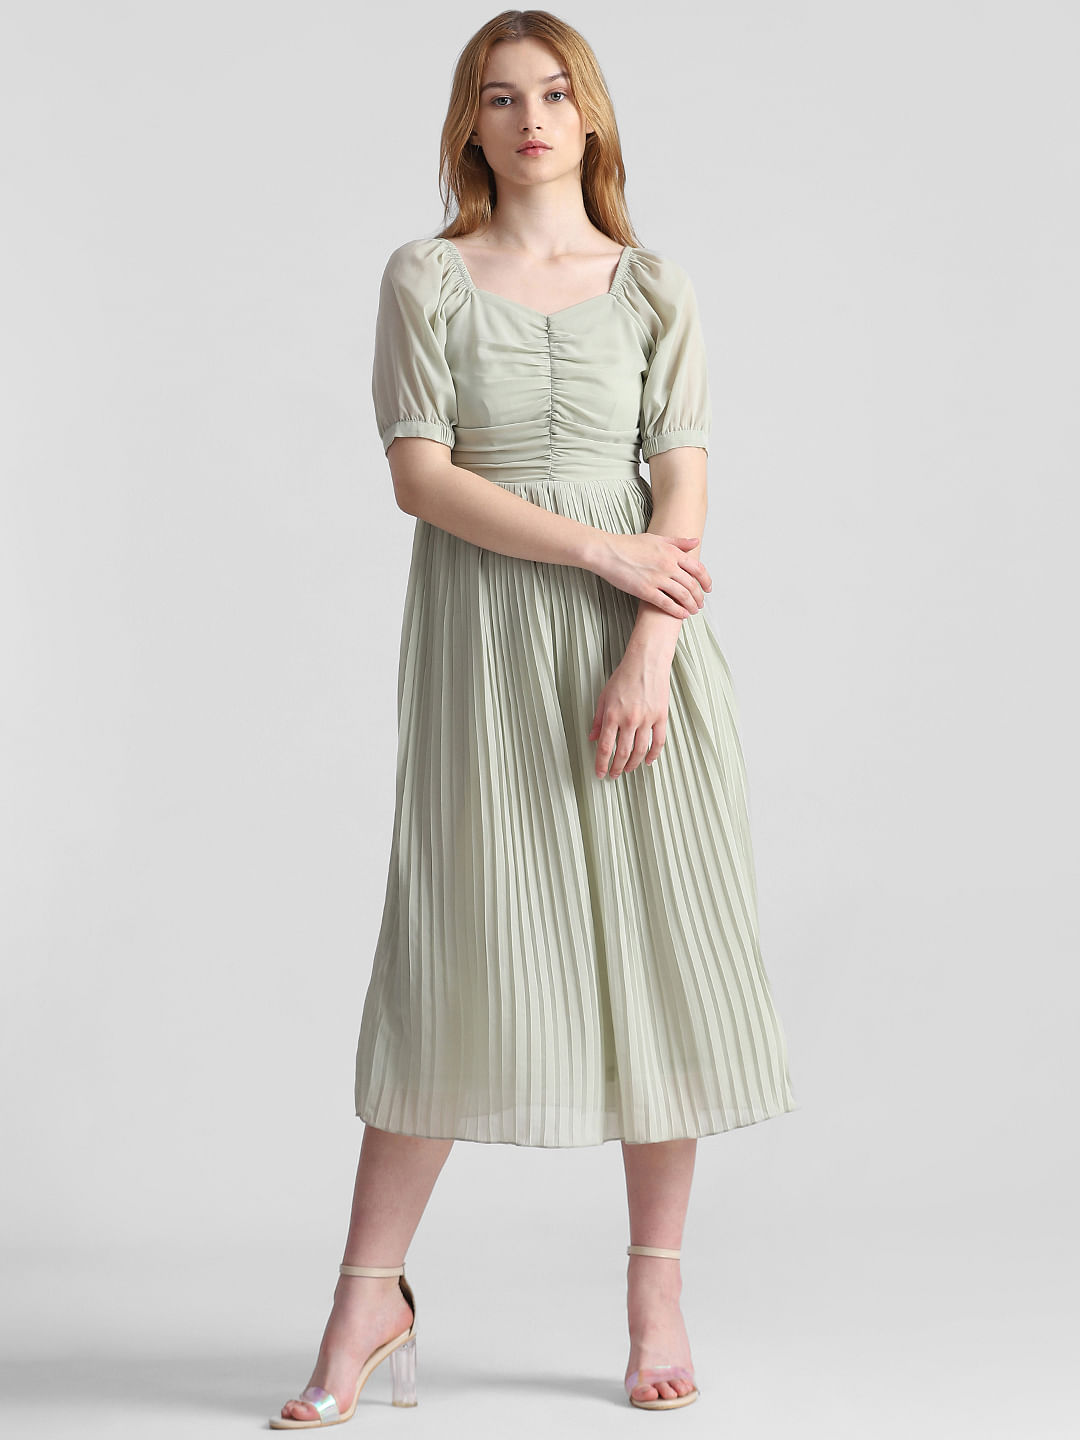 Midi Dresses Australia | Midi Dress Online at Twosisters The Label